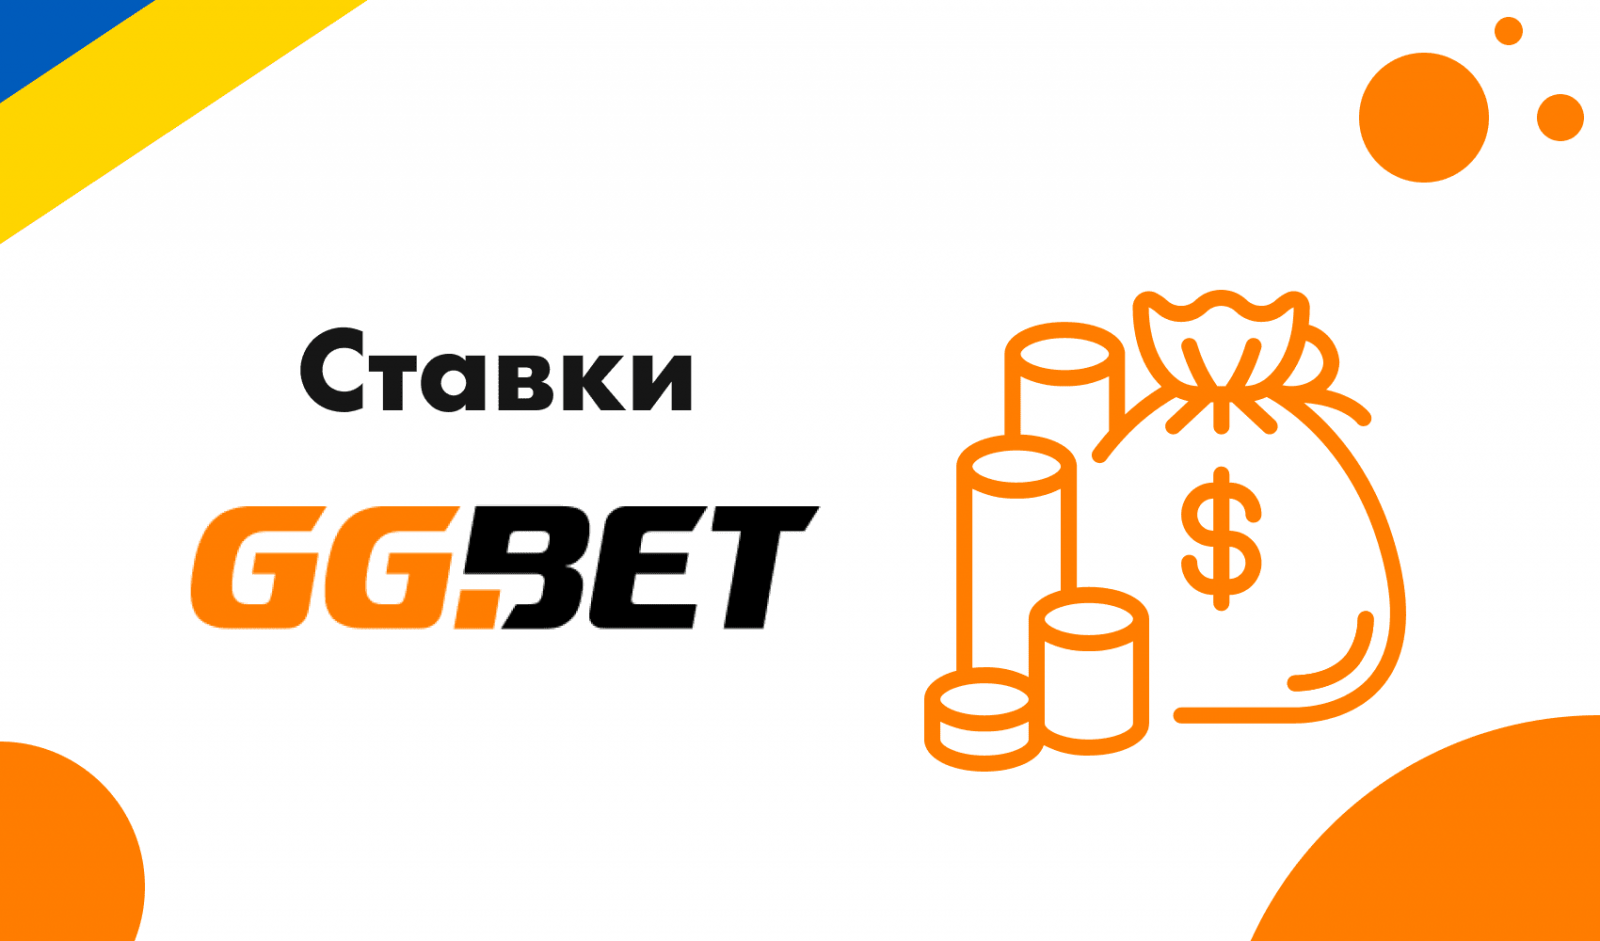 Ггбет регистрация ggbet stavki net ru. Ггбет. GGBET конкурсы. GGBET logo.